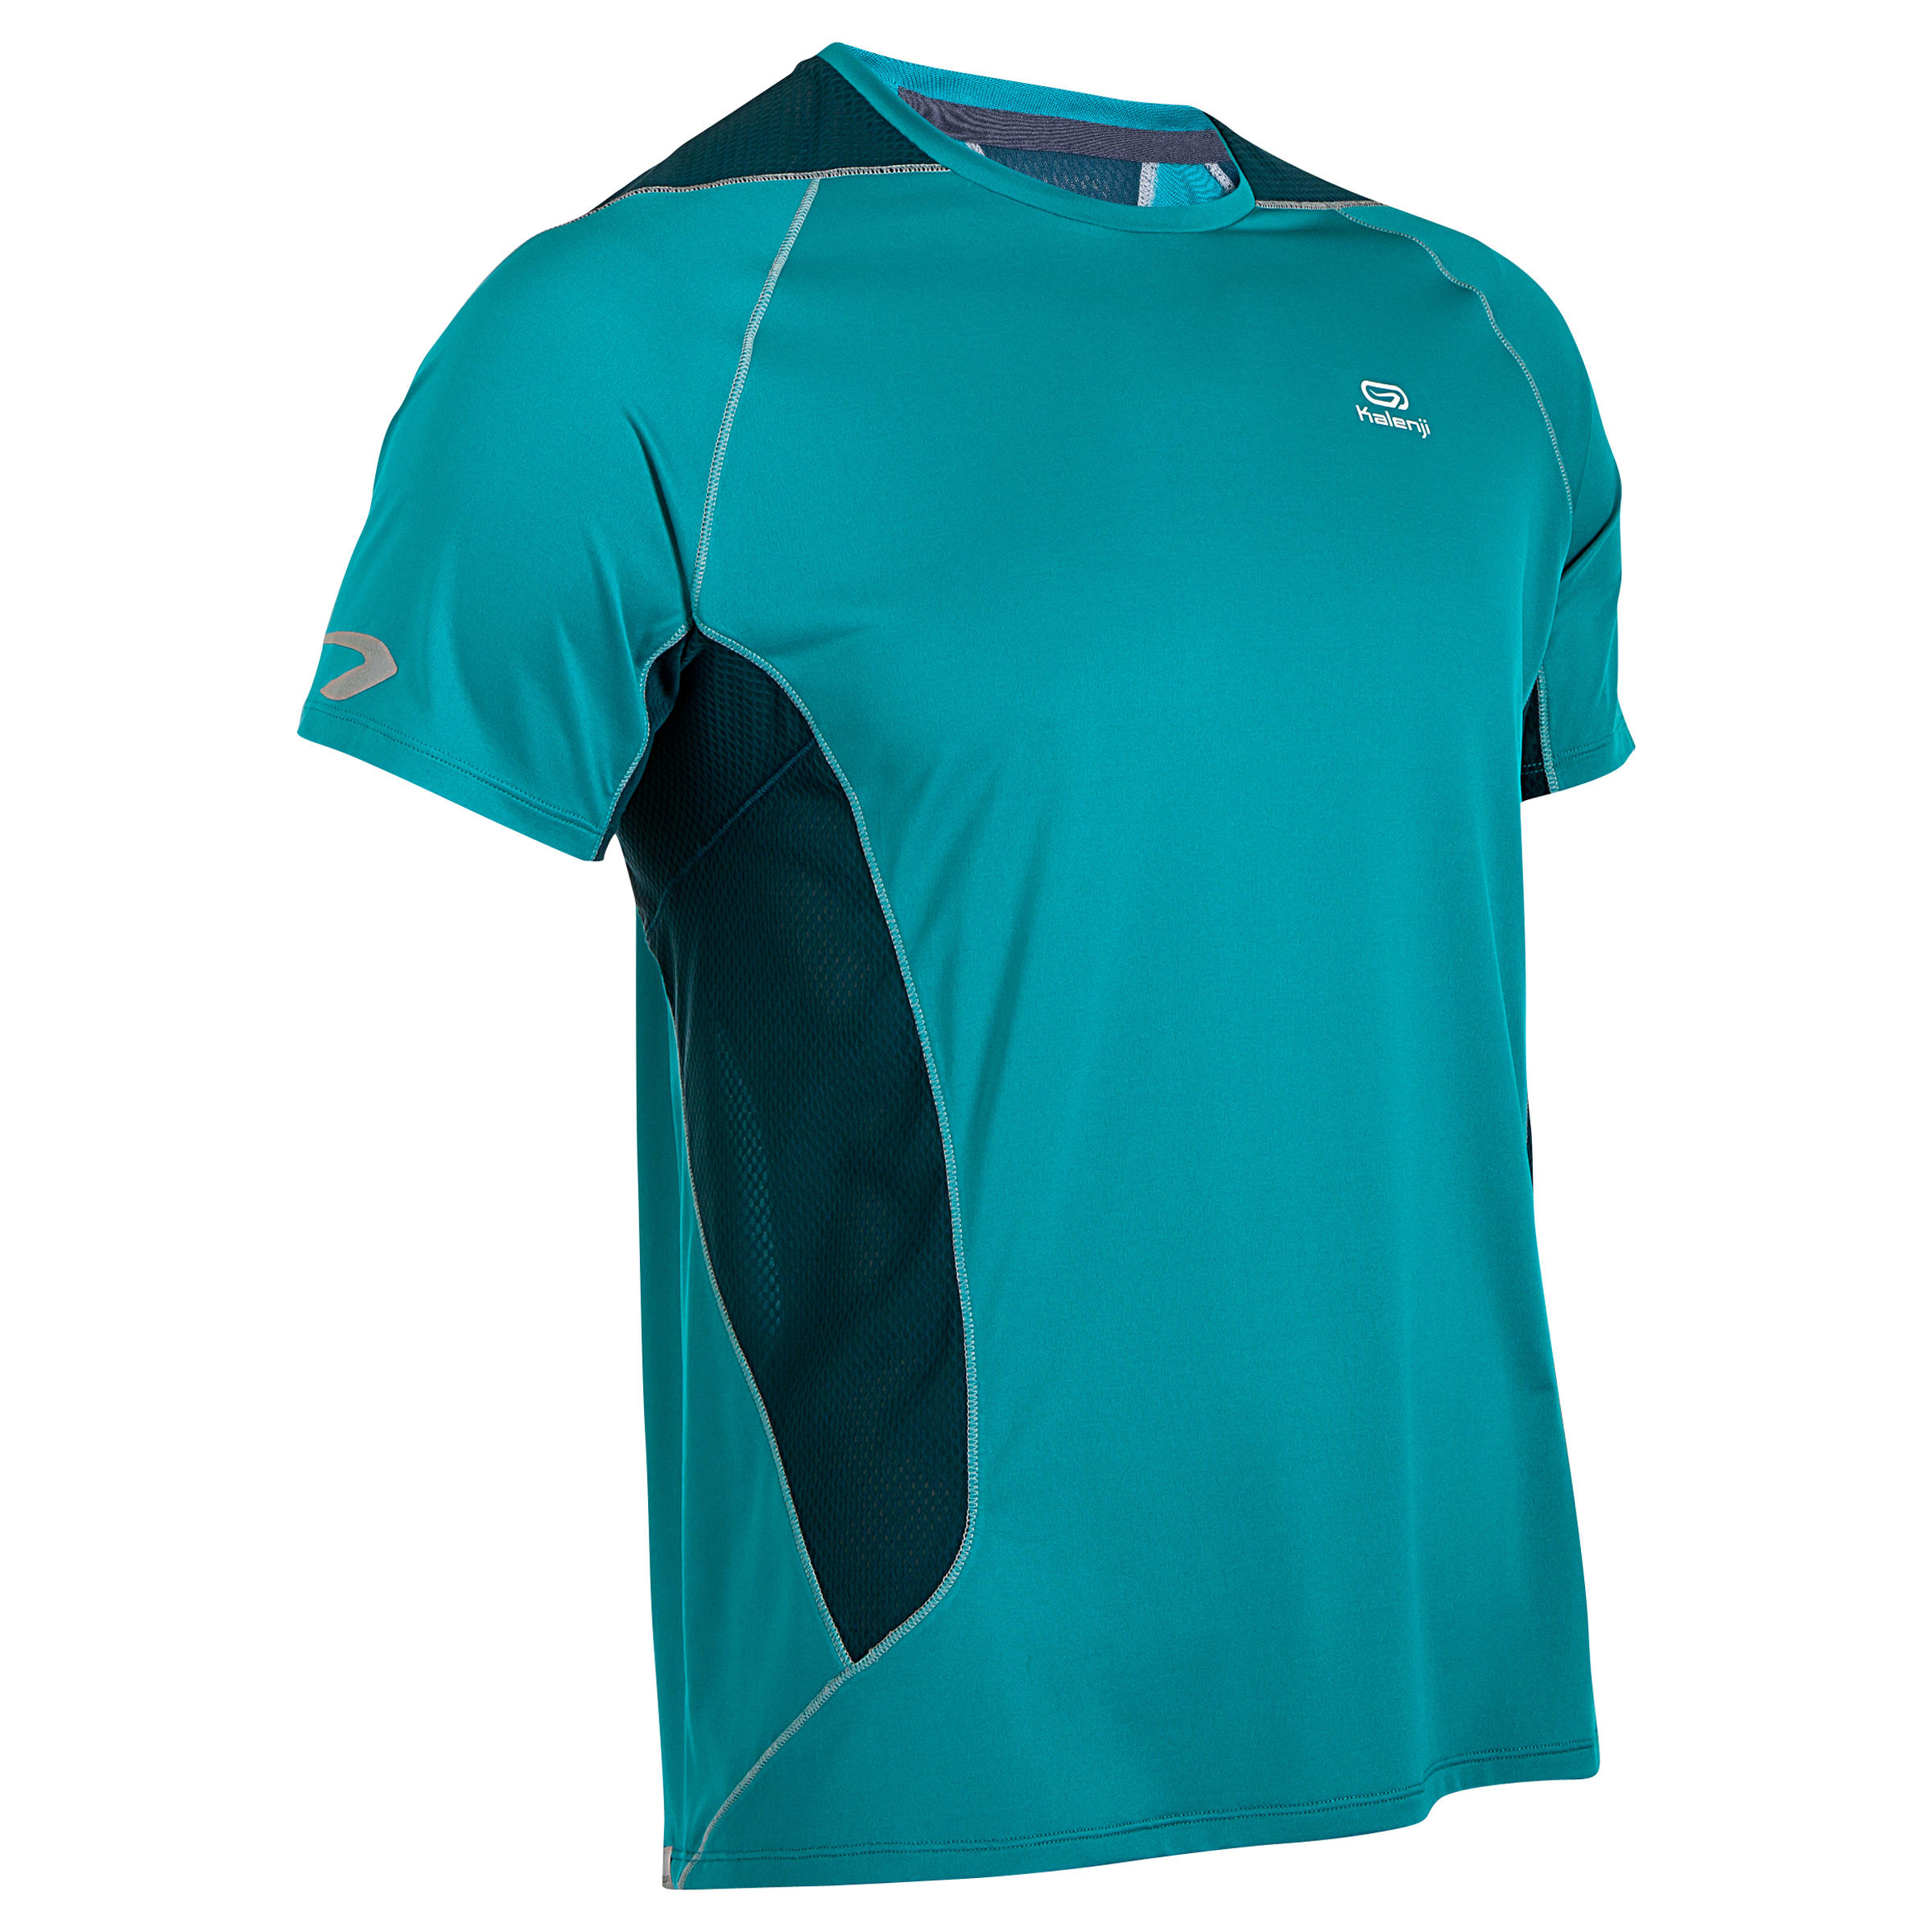 KALENJI Eliofeel Men's Running T-shirt - blue green